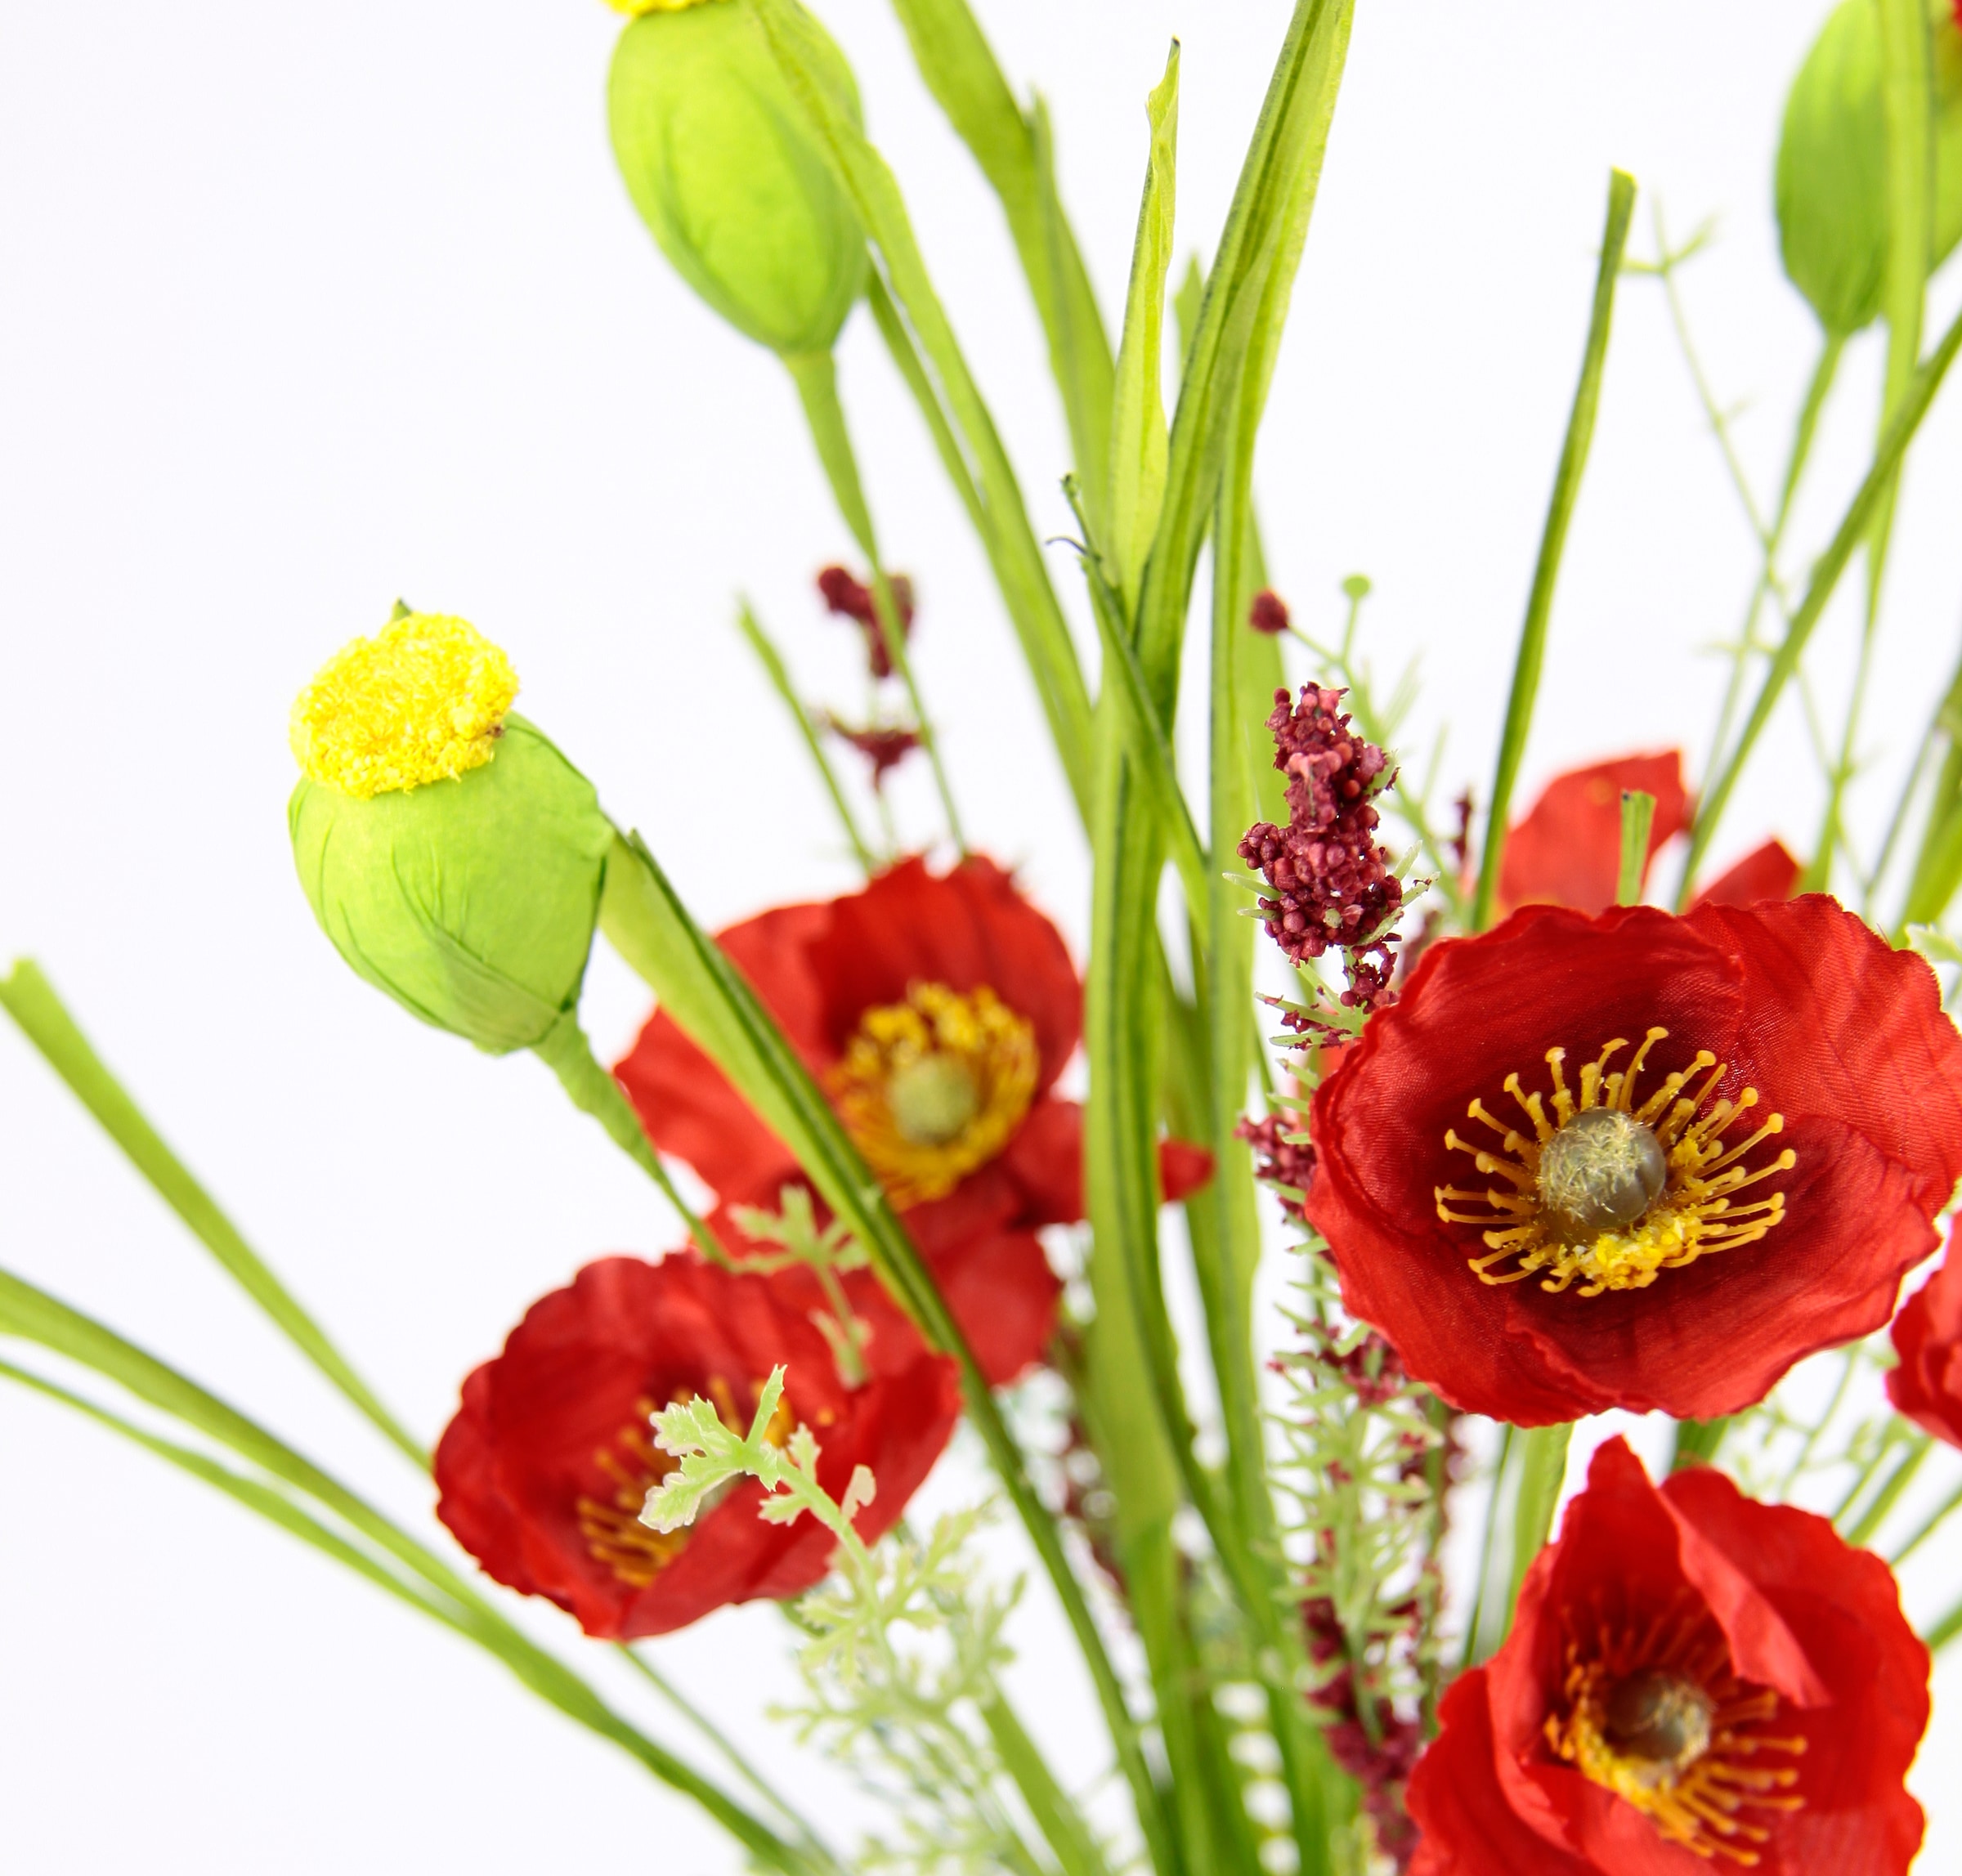 I.GE.A. Kunstblume Keramik«, Raten Mohn Vase kaufen Mohnbusch in Seidenblumenstrauß Mohnblume Bouquet Blumen auf »Mohnblumenbusch Strauß aus